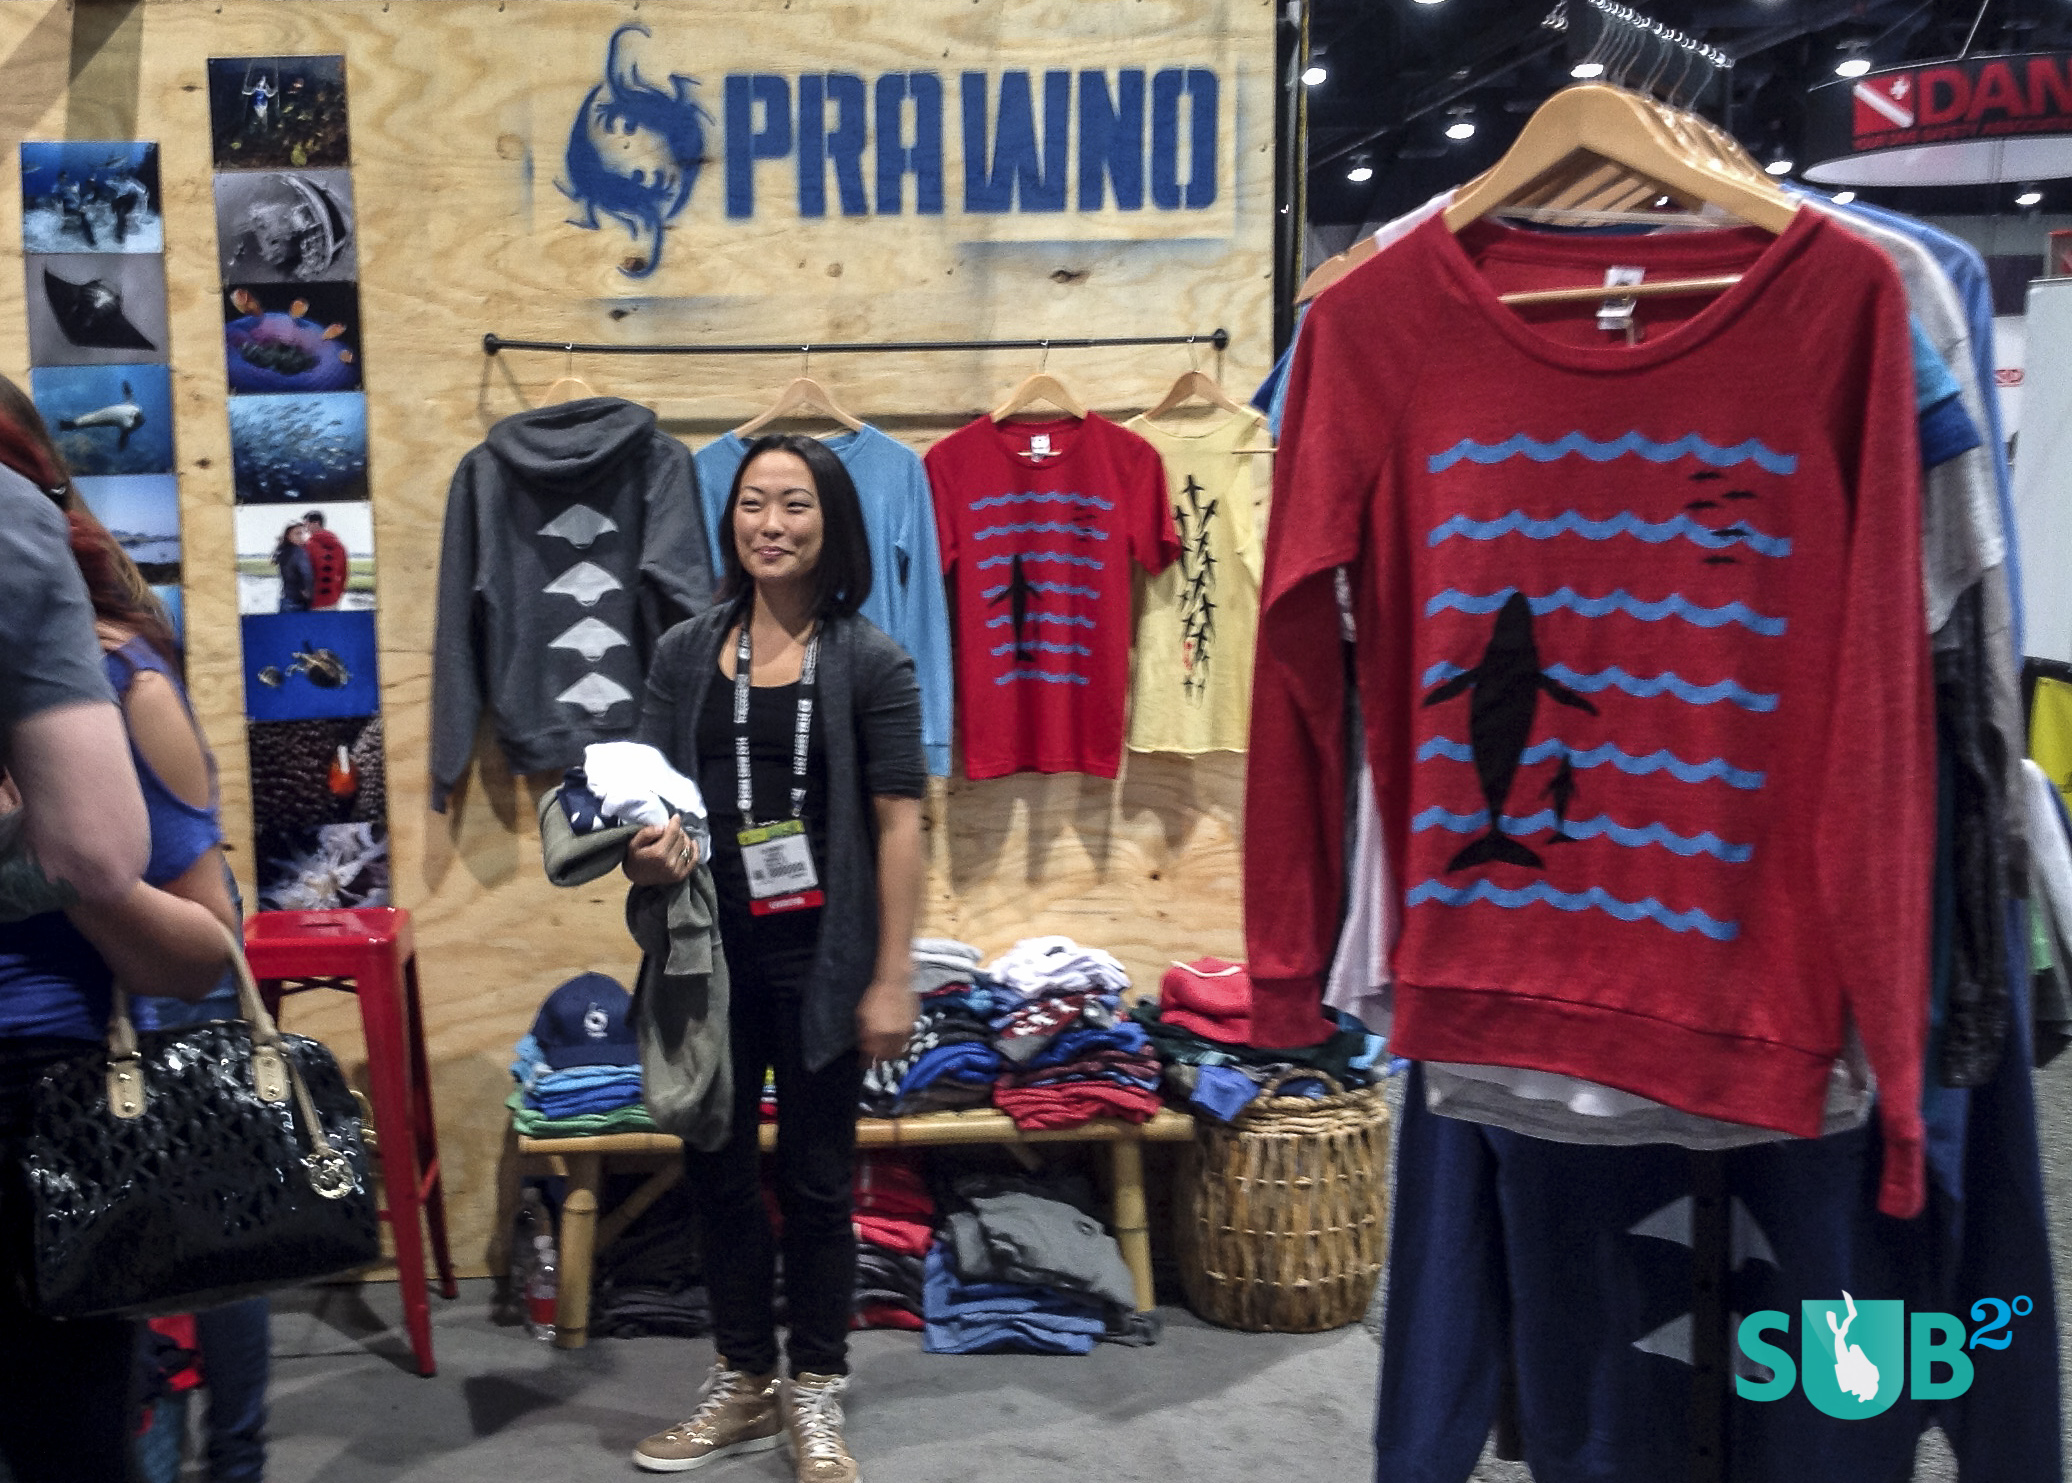 Lia Barrett, creative director for Prawno Apparel, shows off their fashionable ocean-minded clothing line.